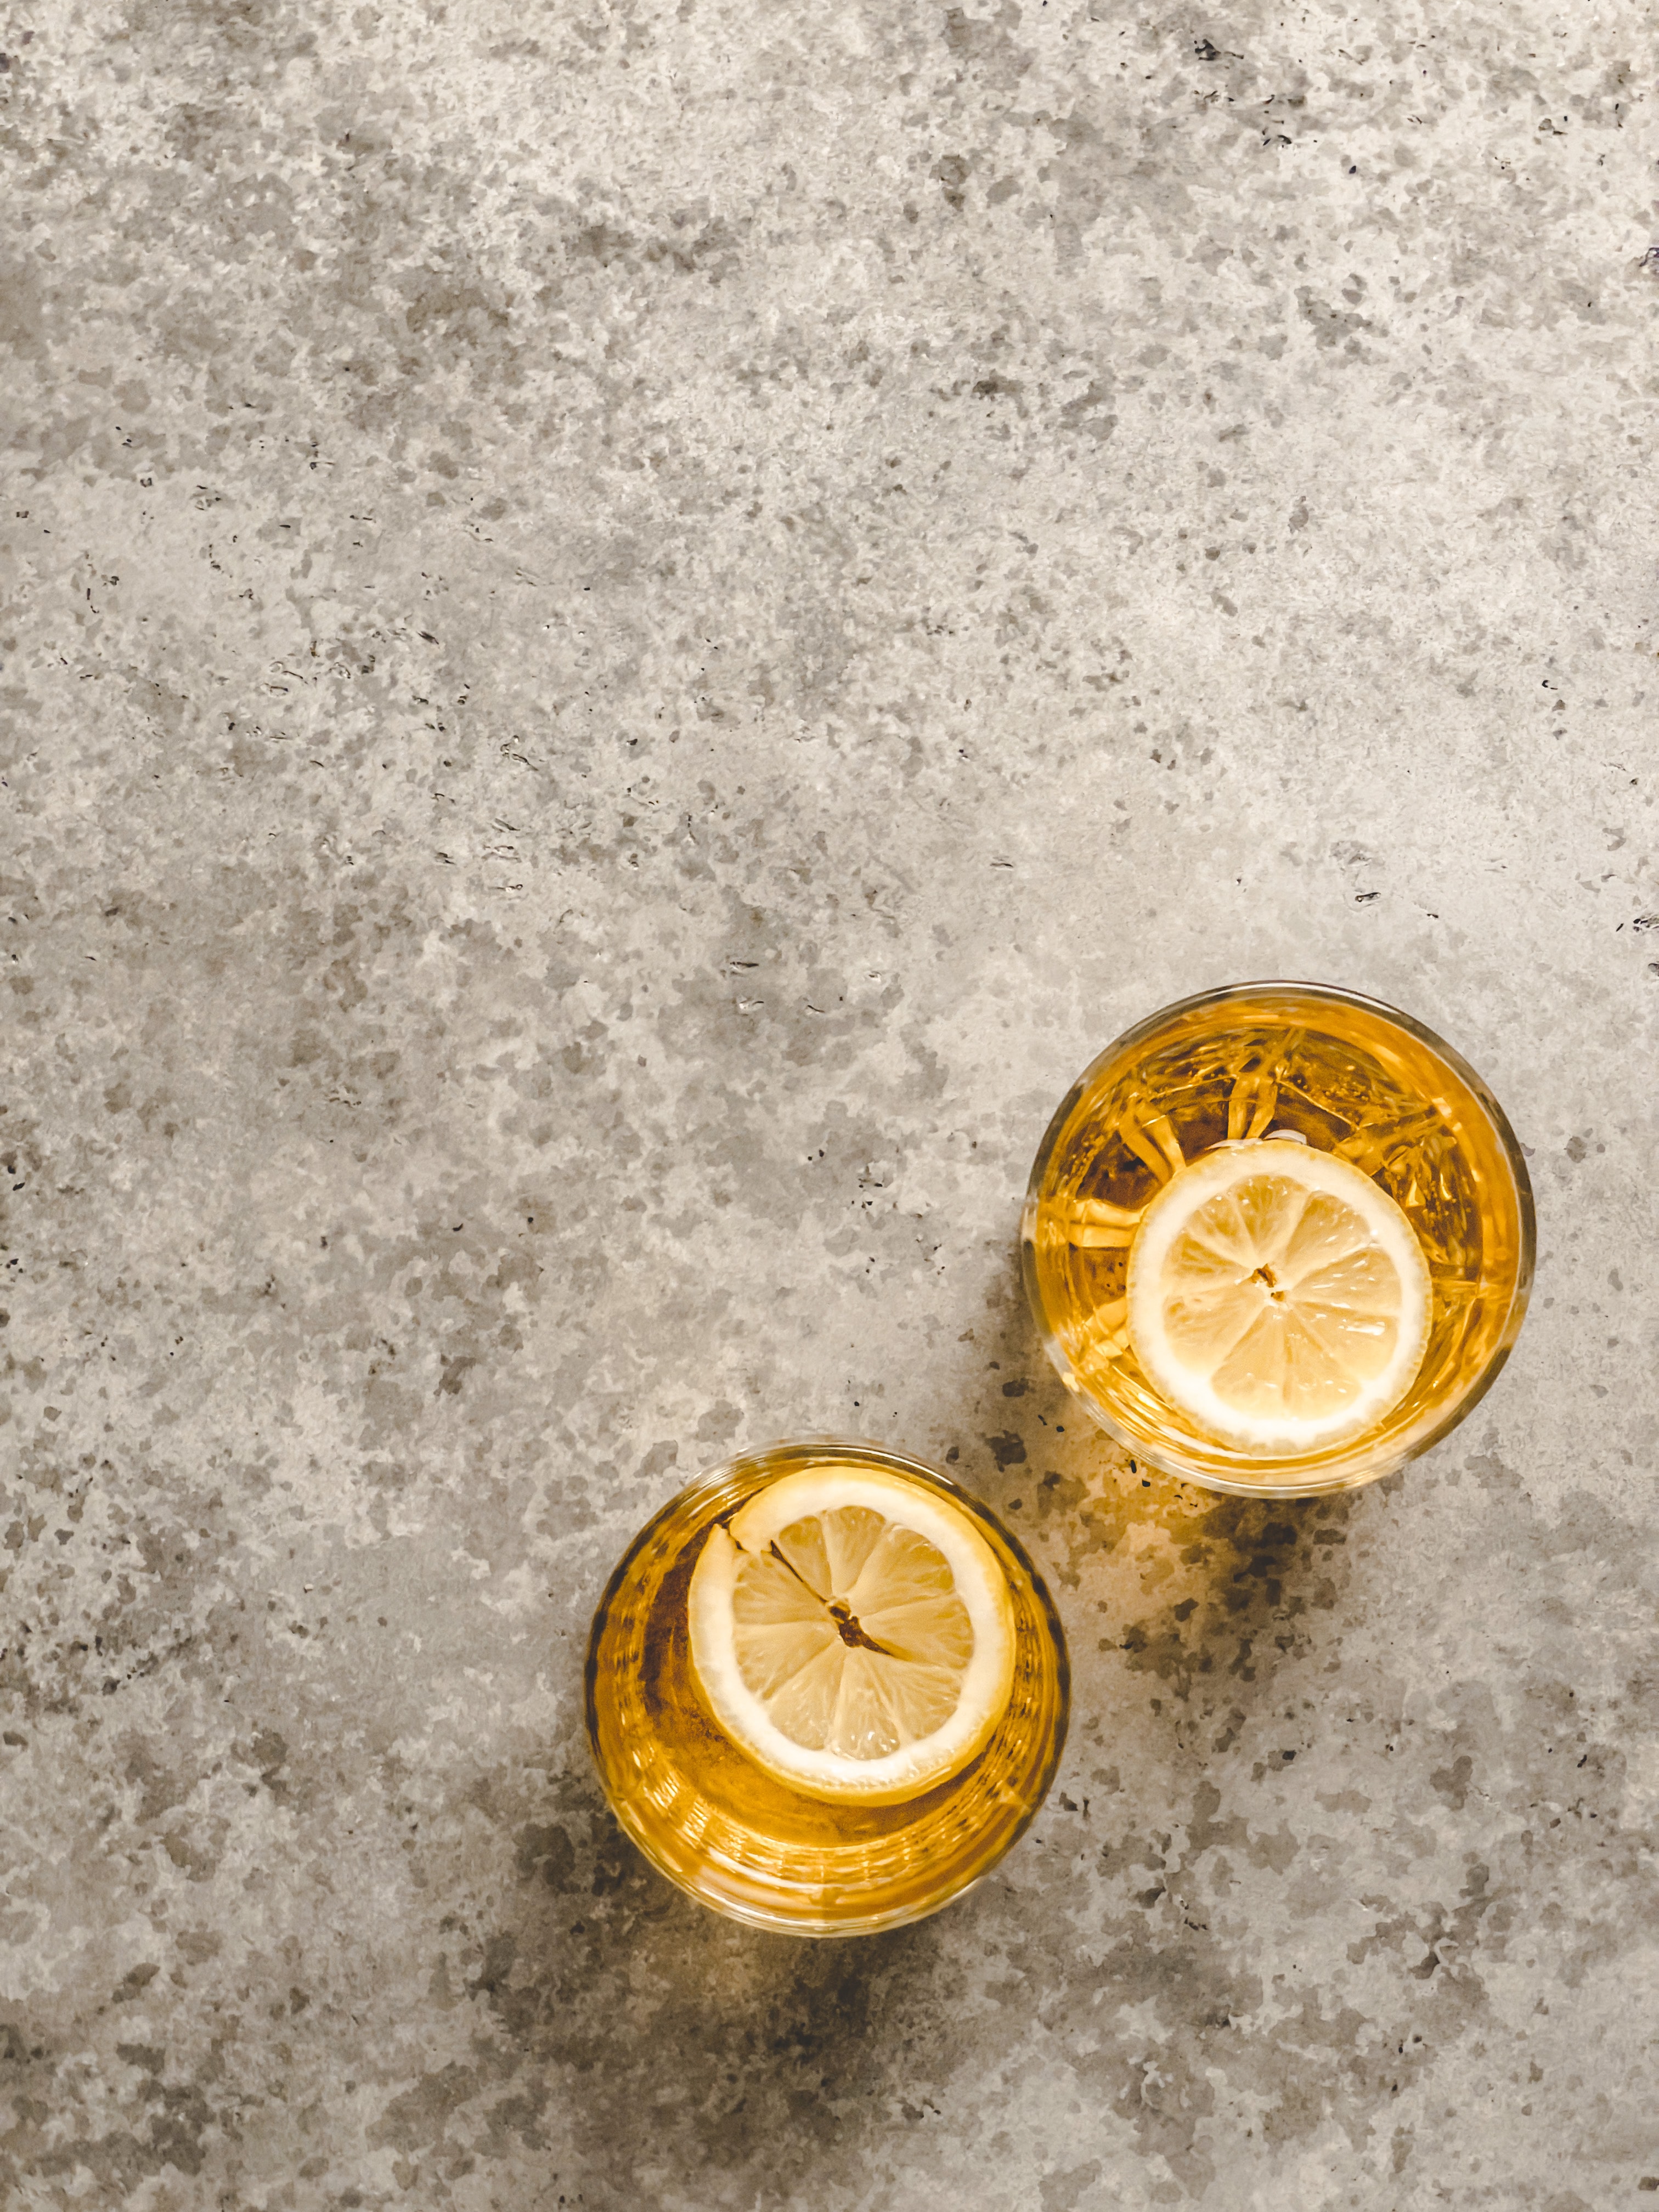 Lemonade iPhone wallpapers